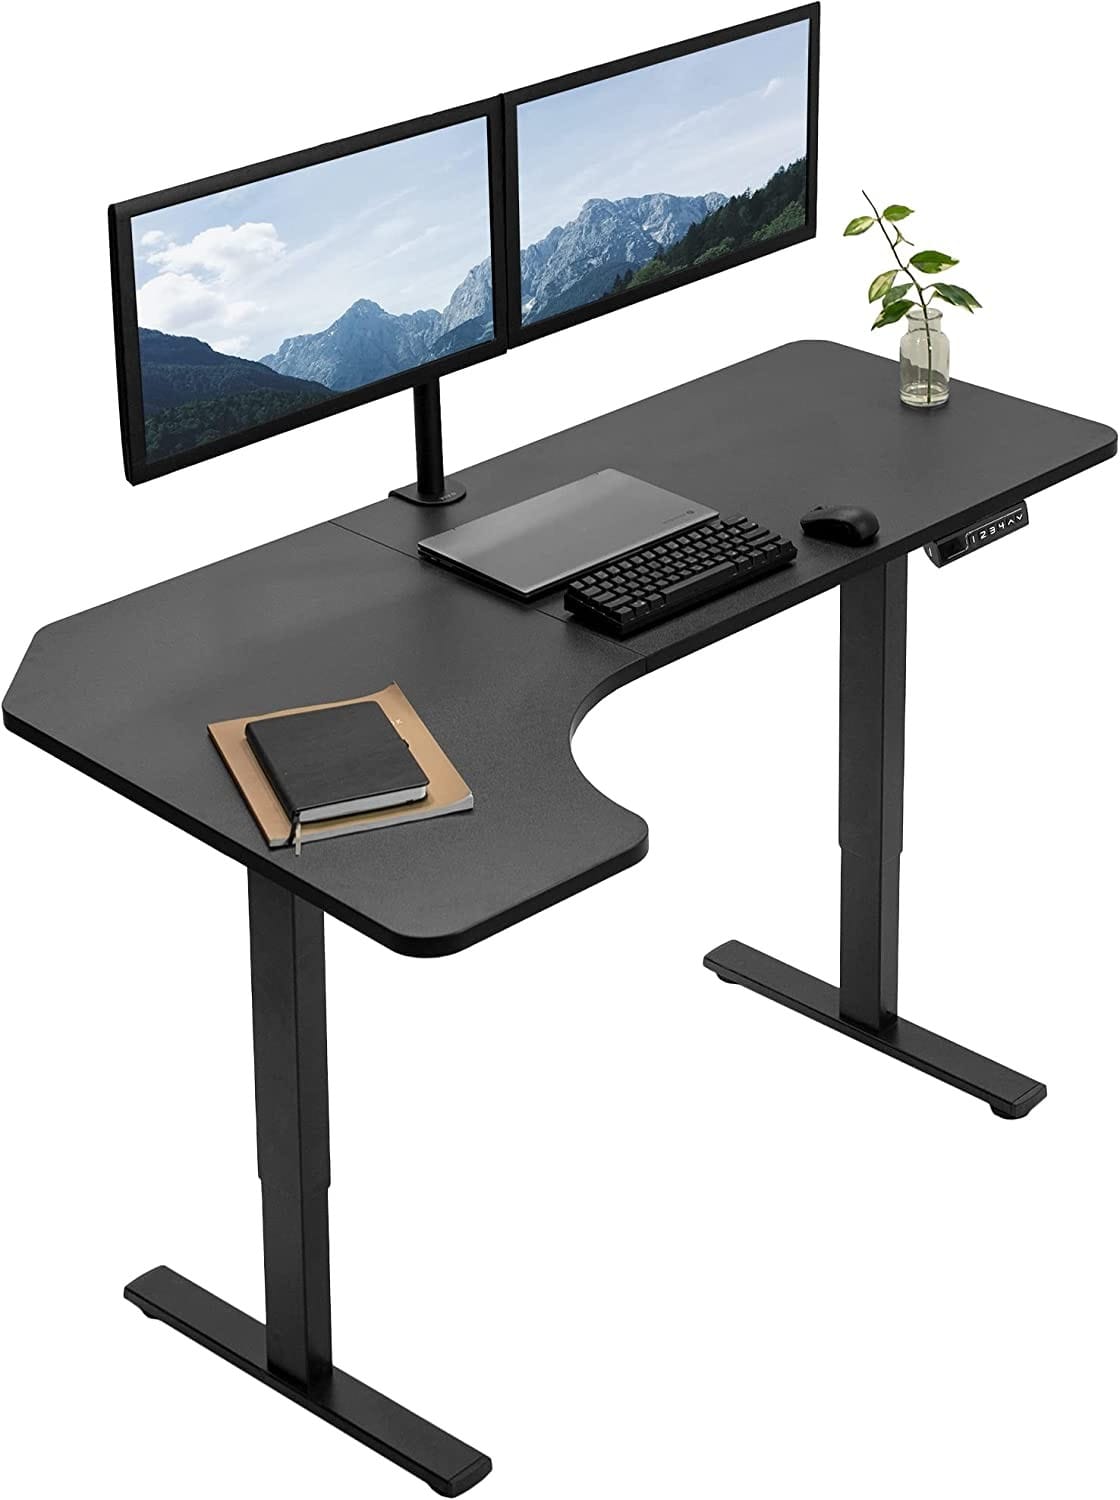 The Vivo Electric Adjustable L Shaped Desk